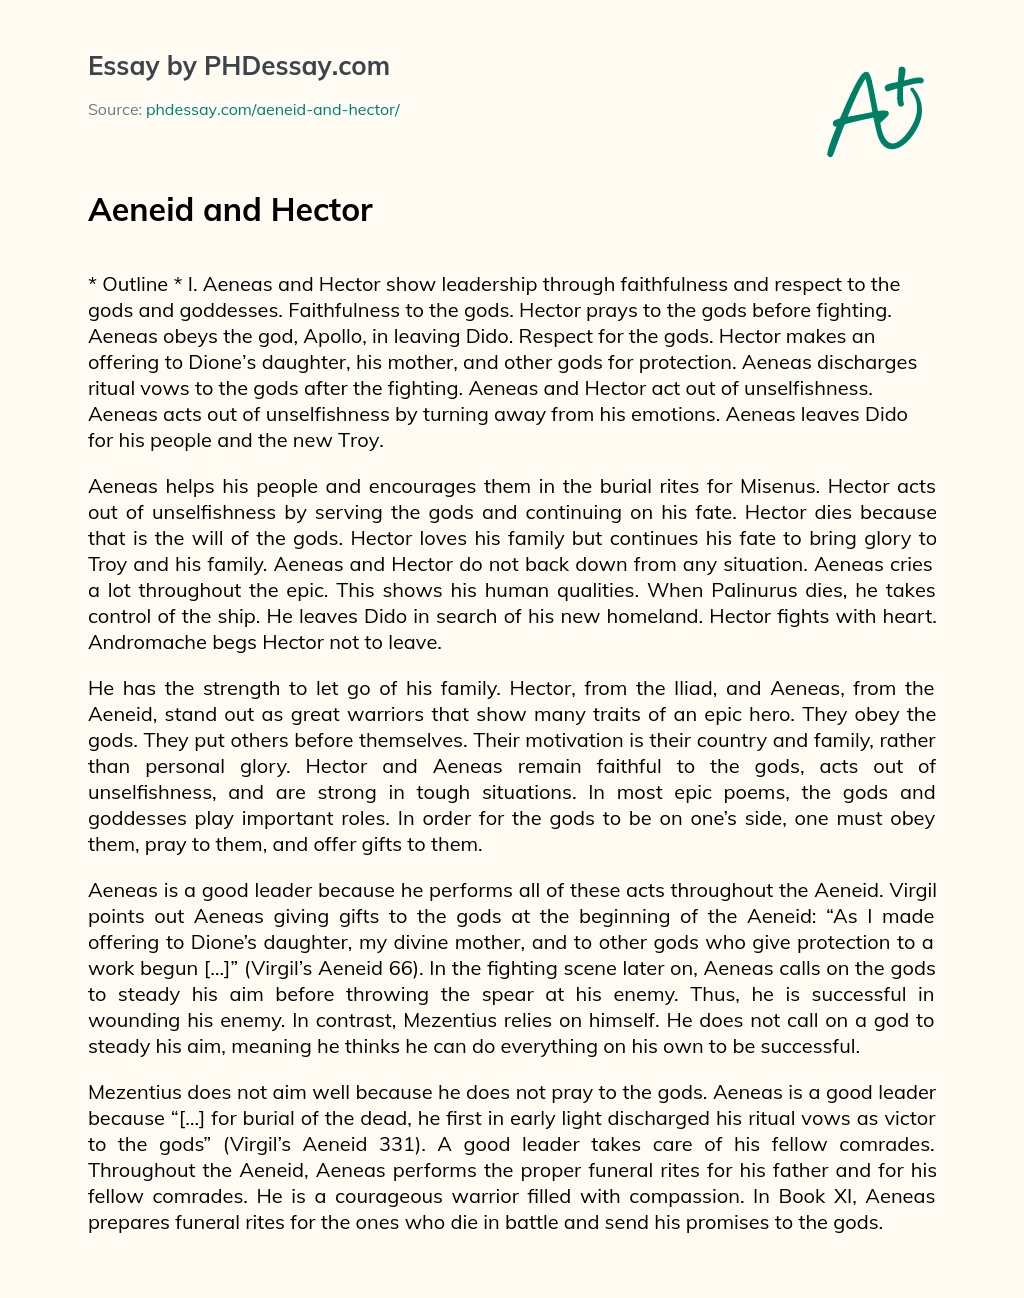 Aeneid and Hector essay